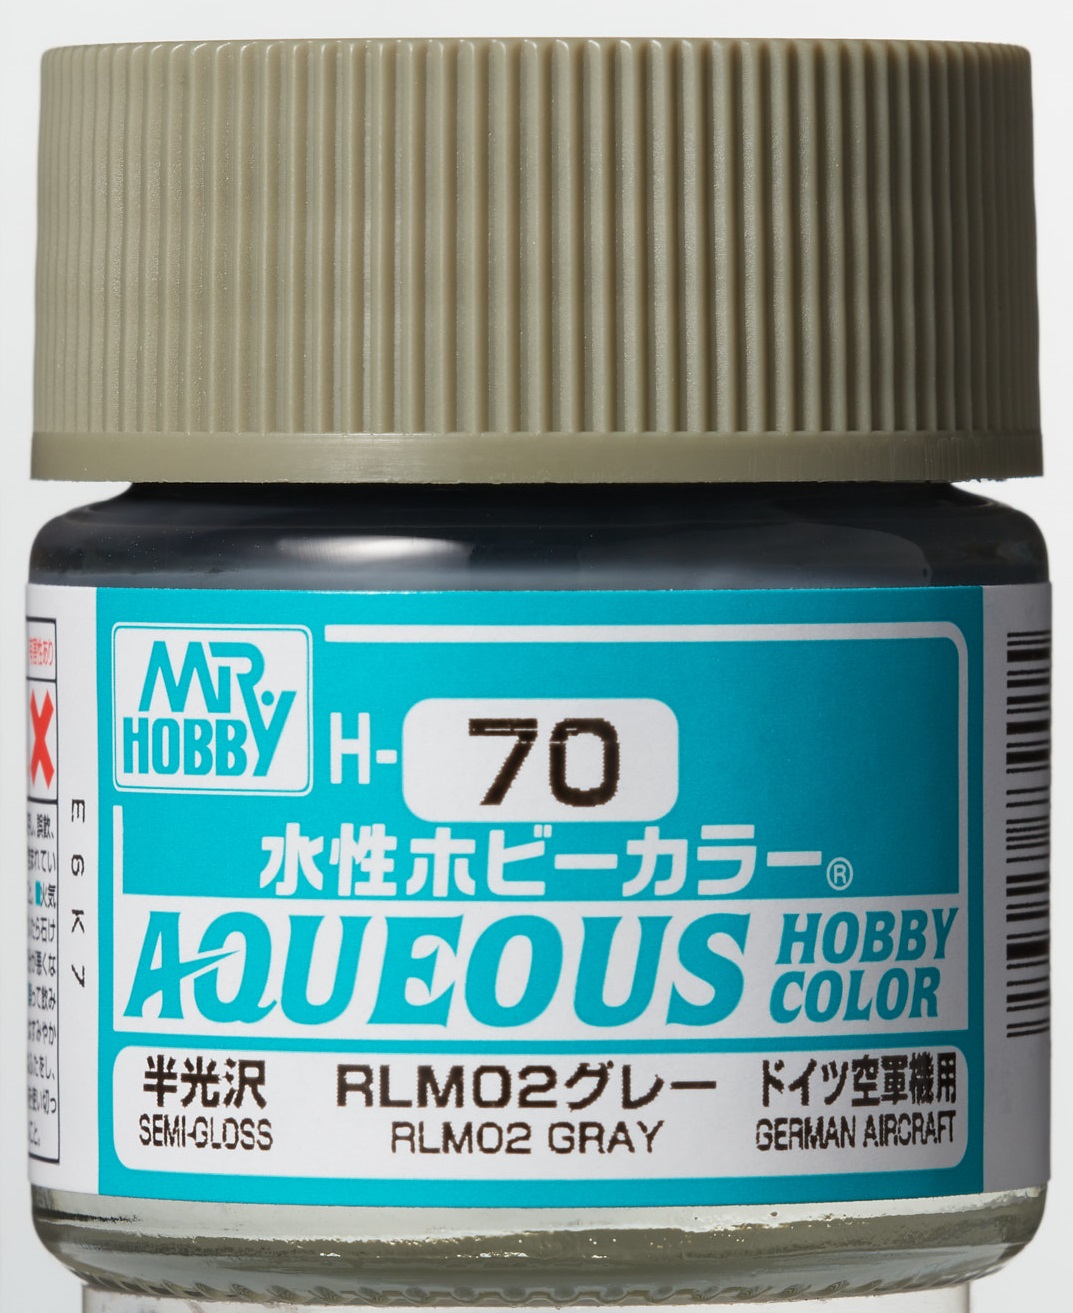 Mr. Aqueous Hobby Color - RLM 02 Gray - H70 - RLM 02 Grau